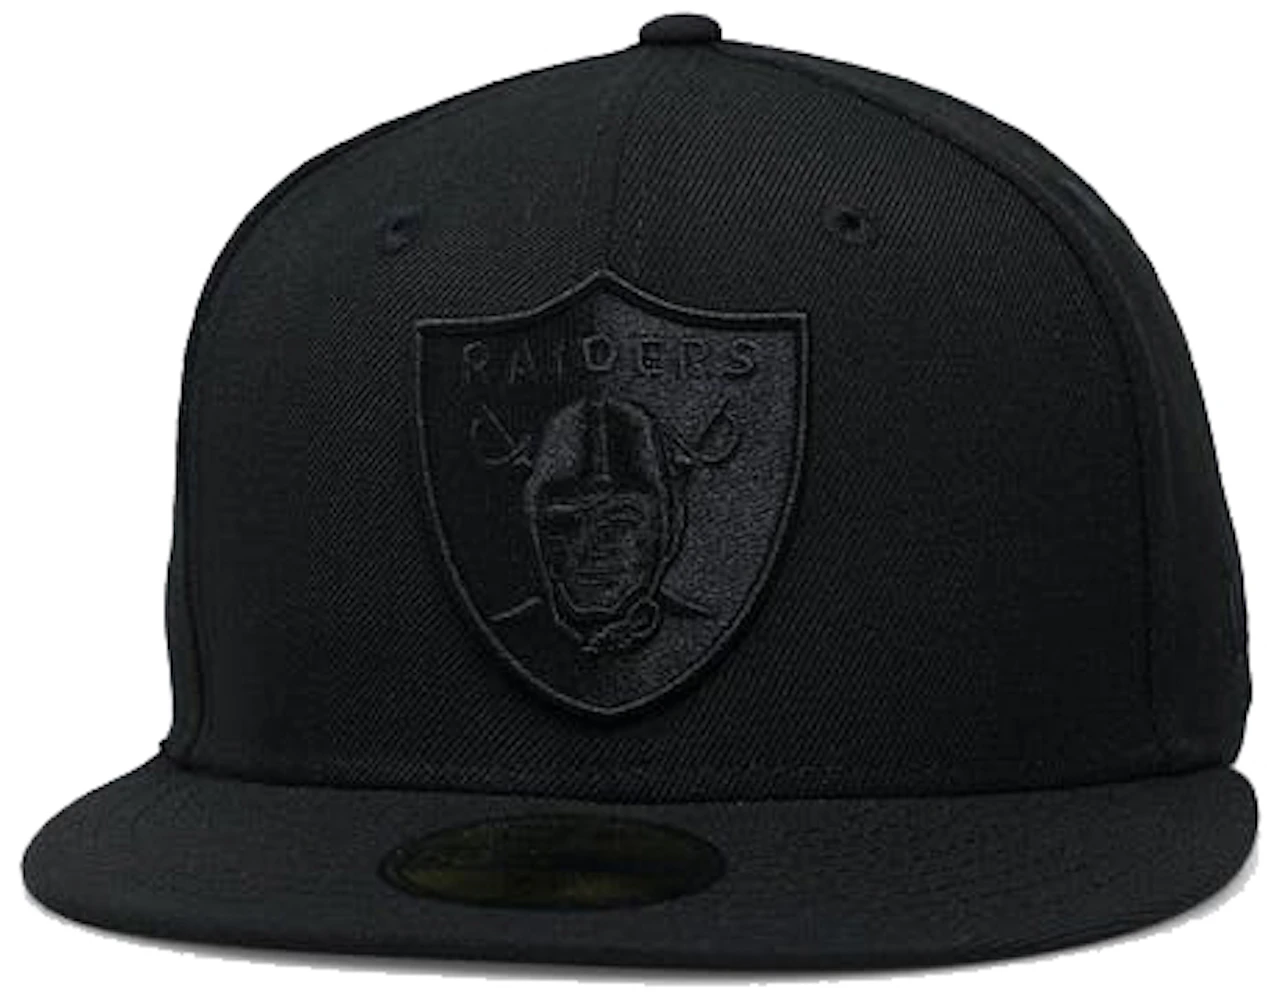 New Era Caps Las Vegas Raiders 59FIFTY Fitted Hat Black/Khaki